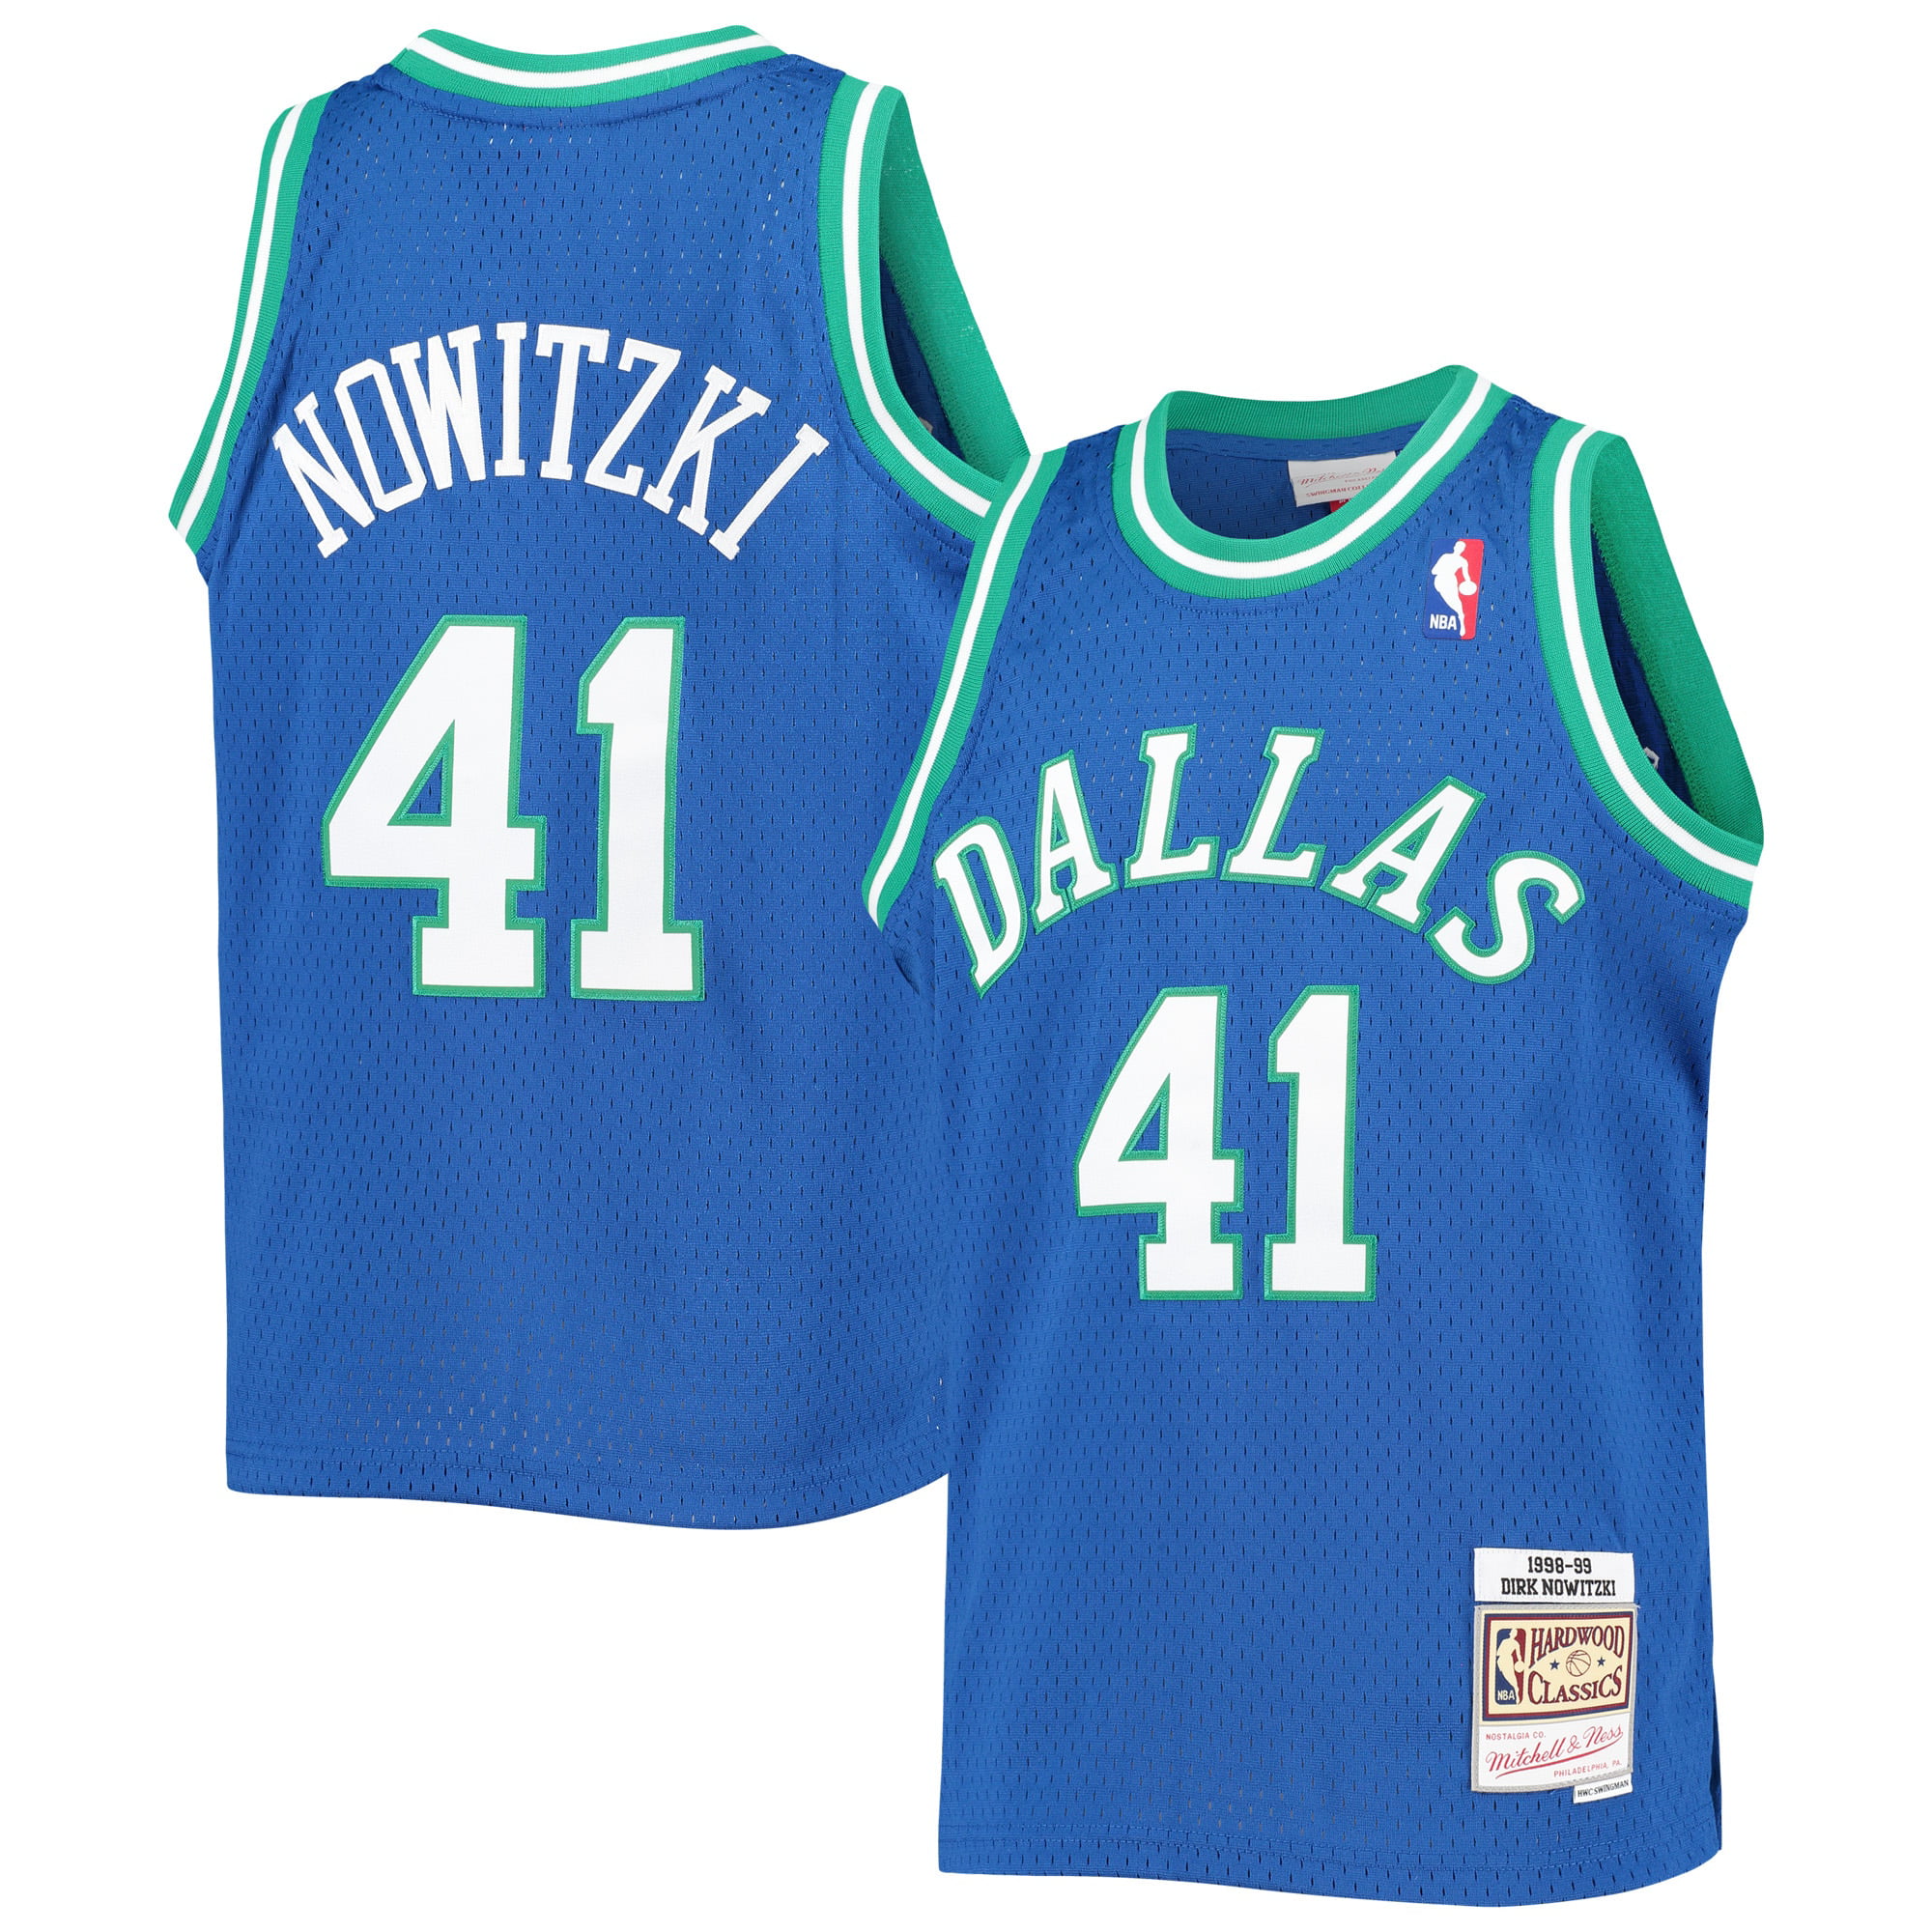 Dirk Nowitzki Signed Mavericks Authentic Mitchell & Ness Jersey